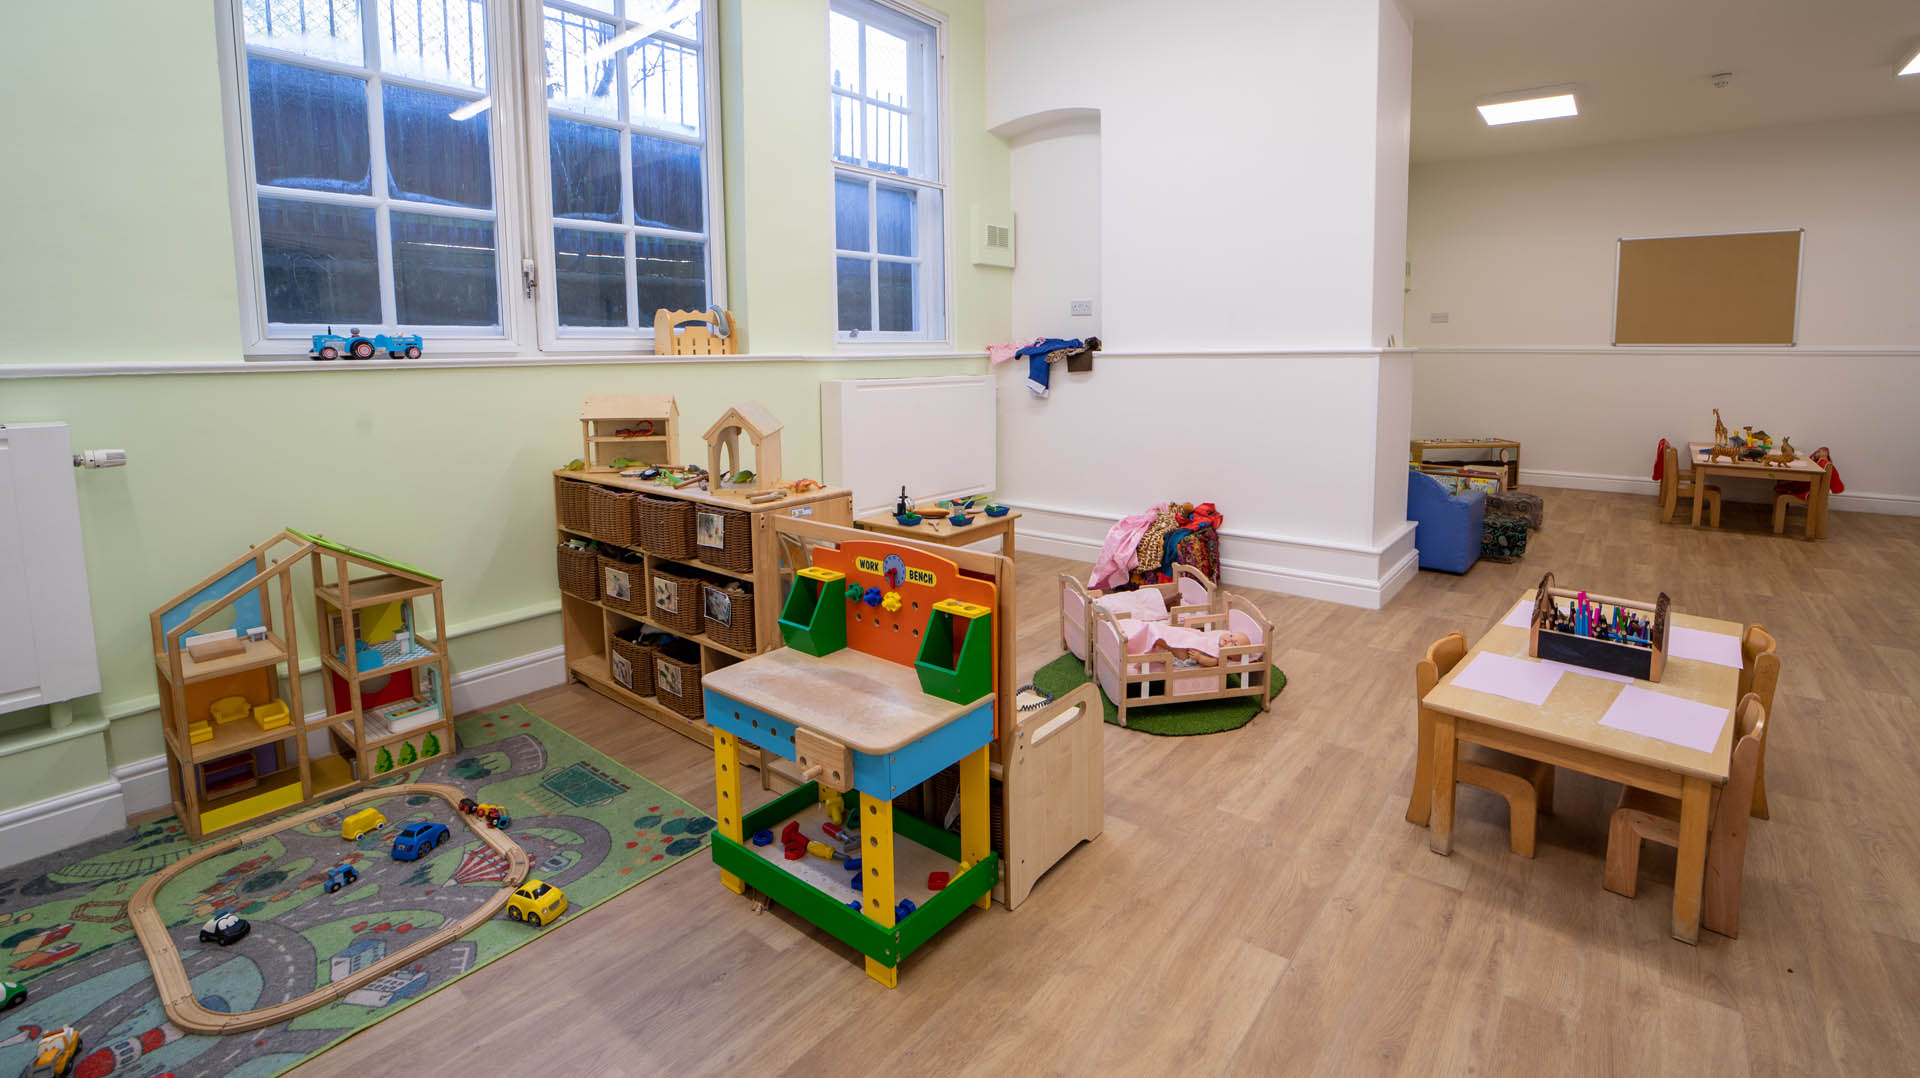 Coulsdon Day Nursery and Preschool nursery room